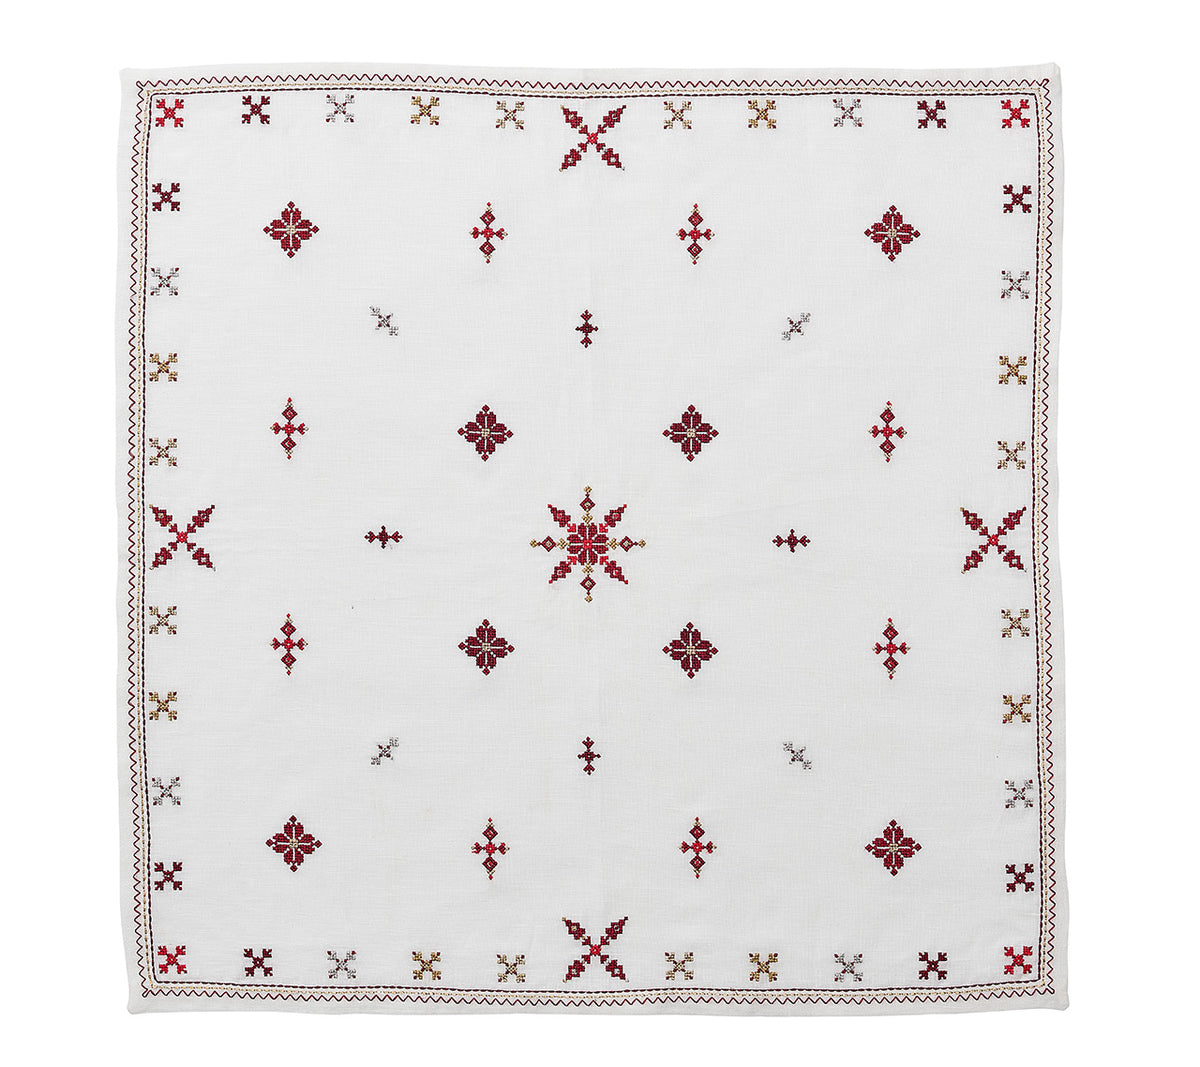 Fez Napkin in White, Red & Gold, Set of 4